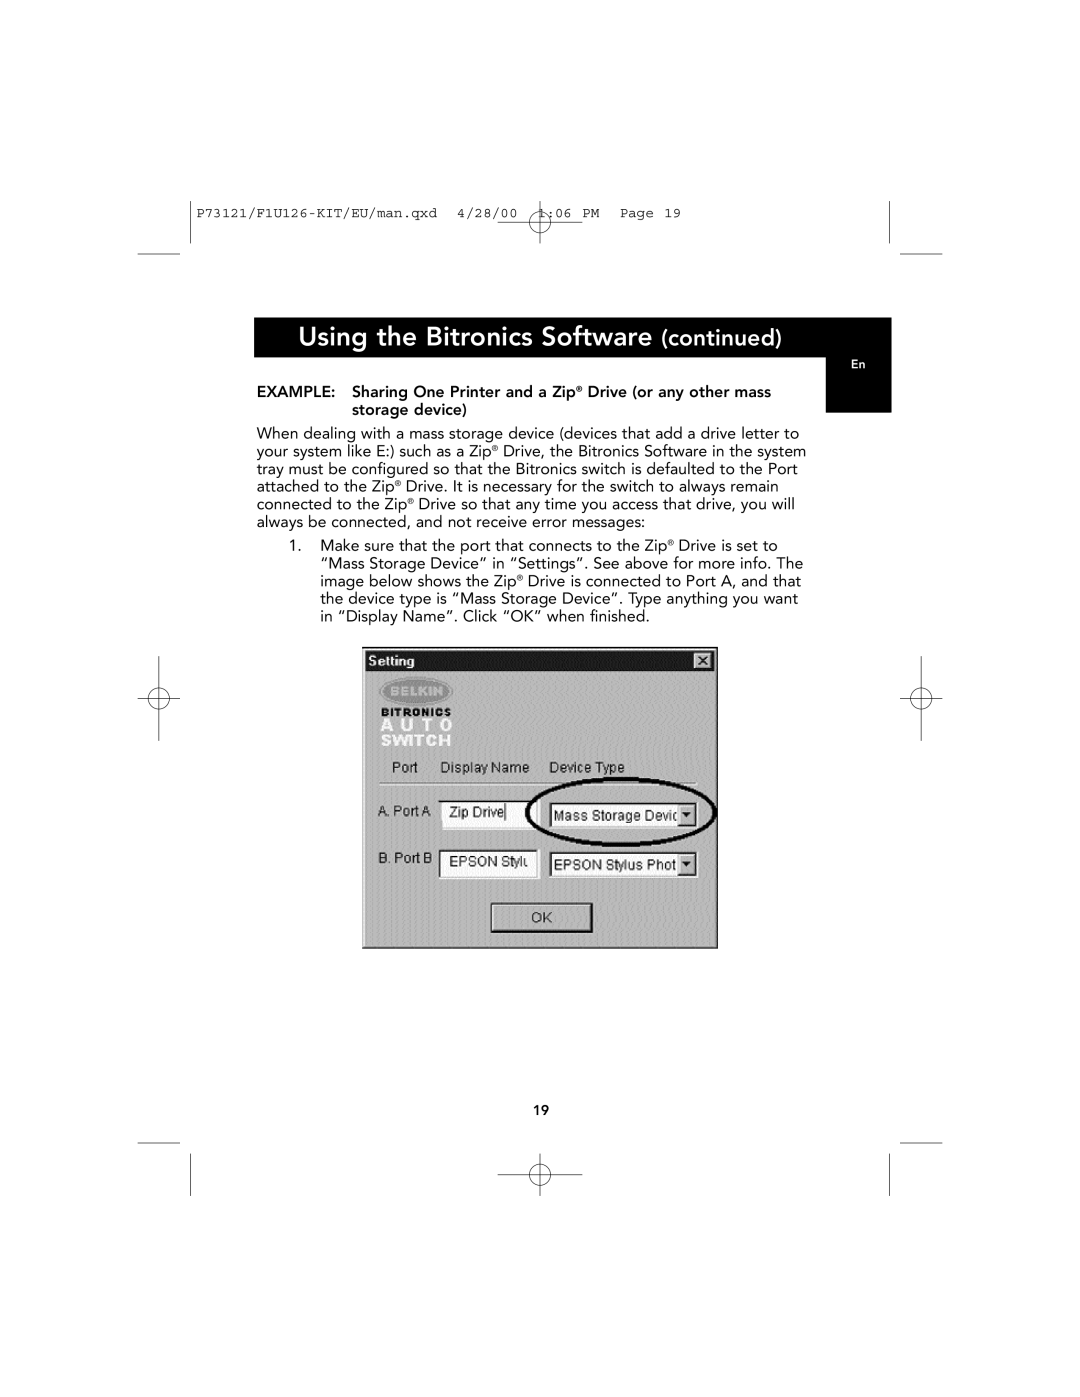 Belkin F1U126-KIT, P73121 user manual Using the Bitronics Software continued 